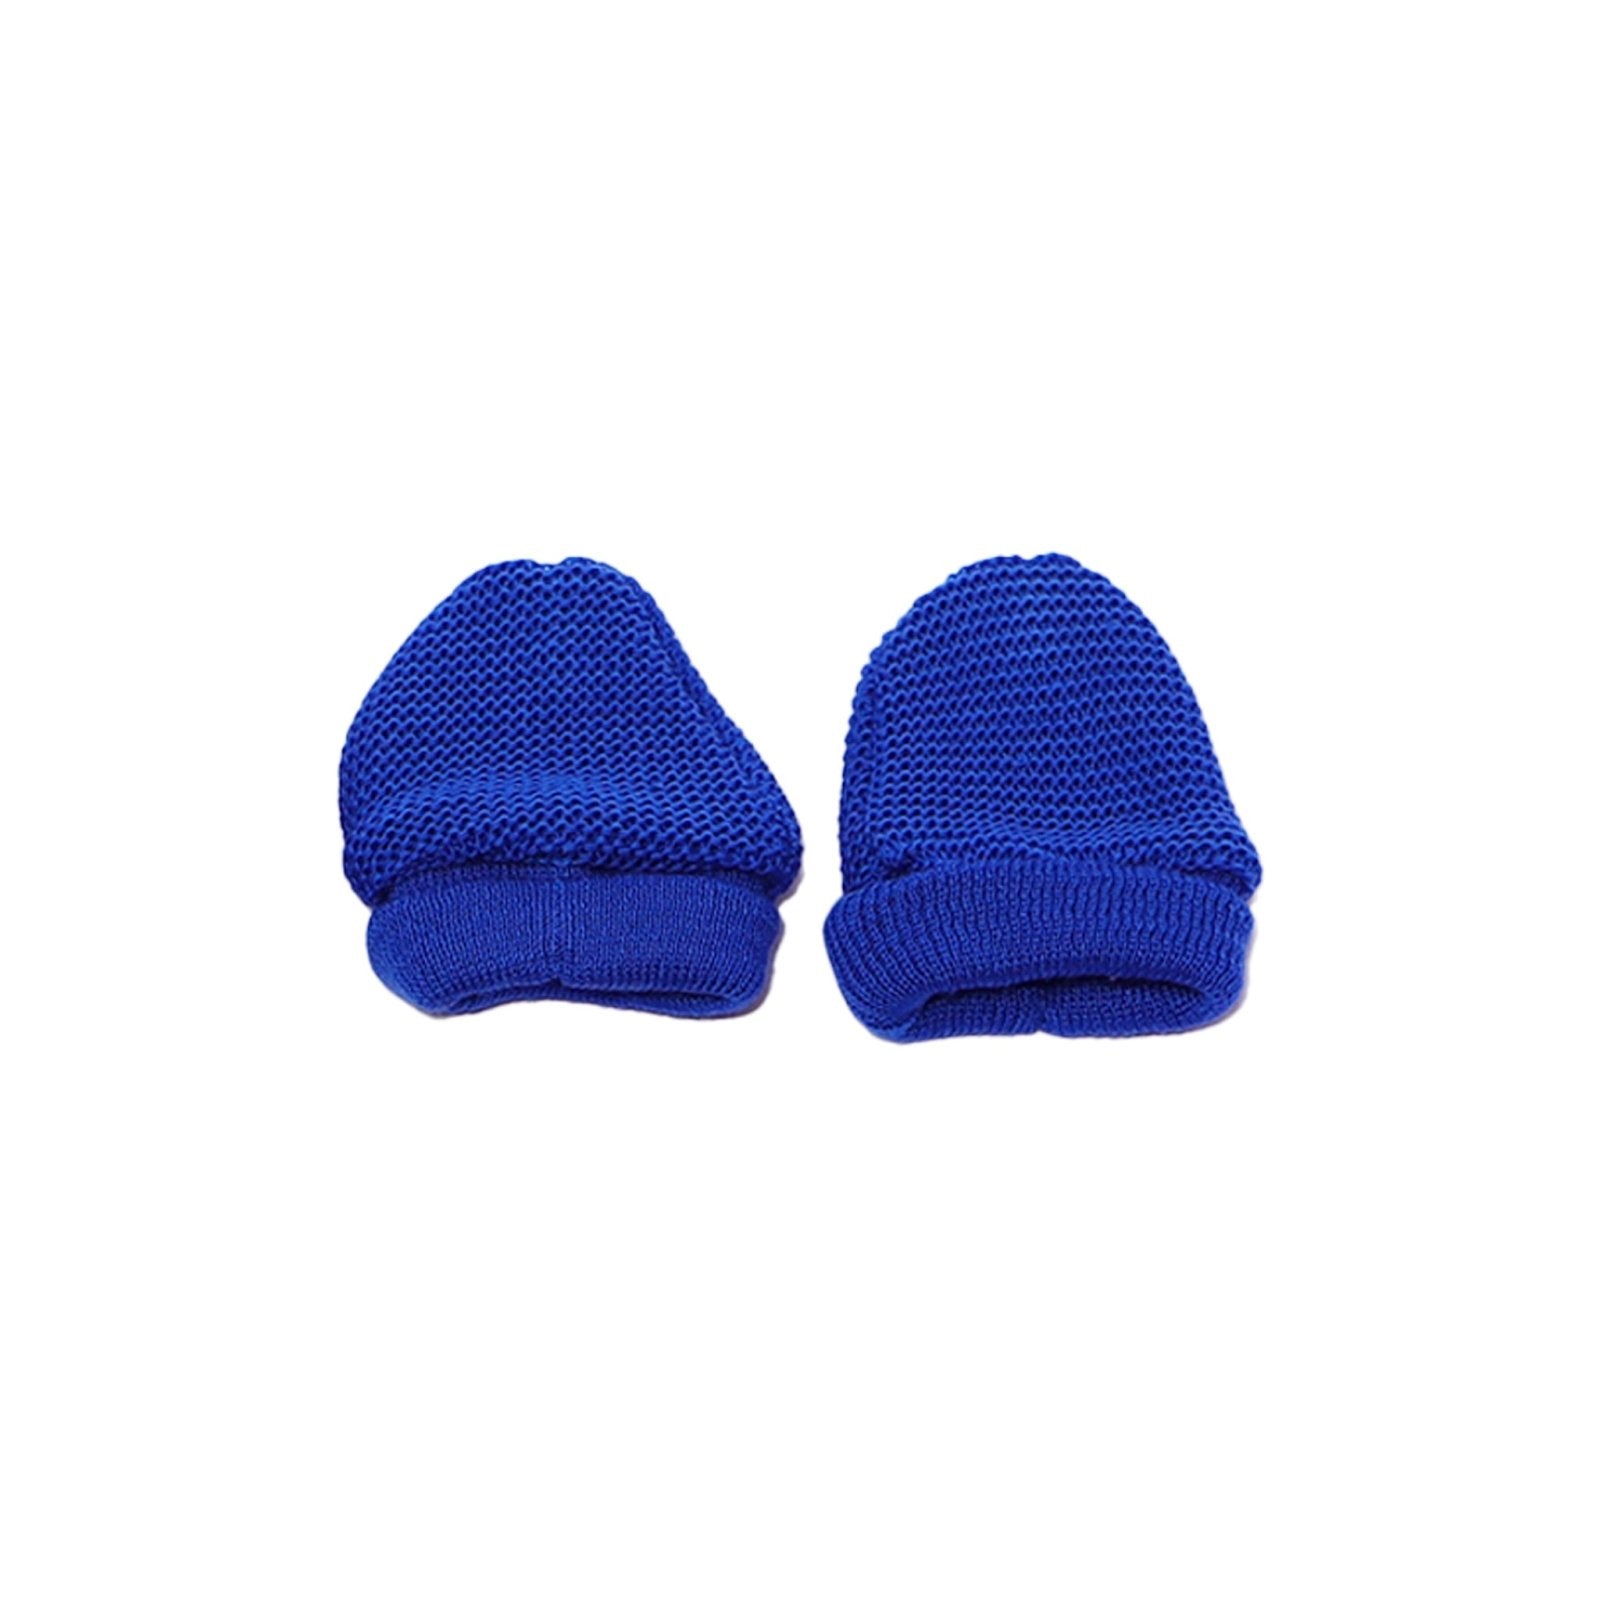 4 Pcs Woolen Gift Set Knitting Royal Blue Color by Little Darling